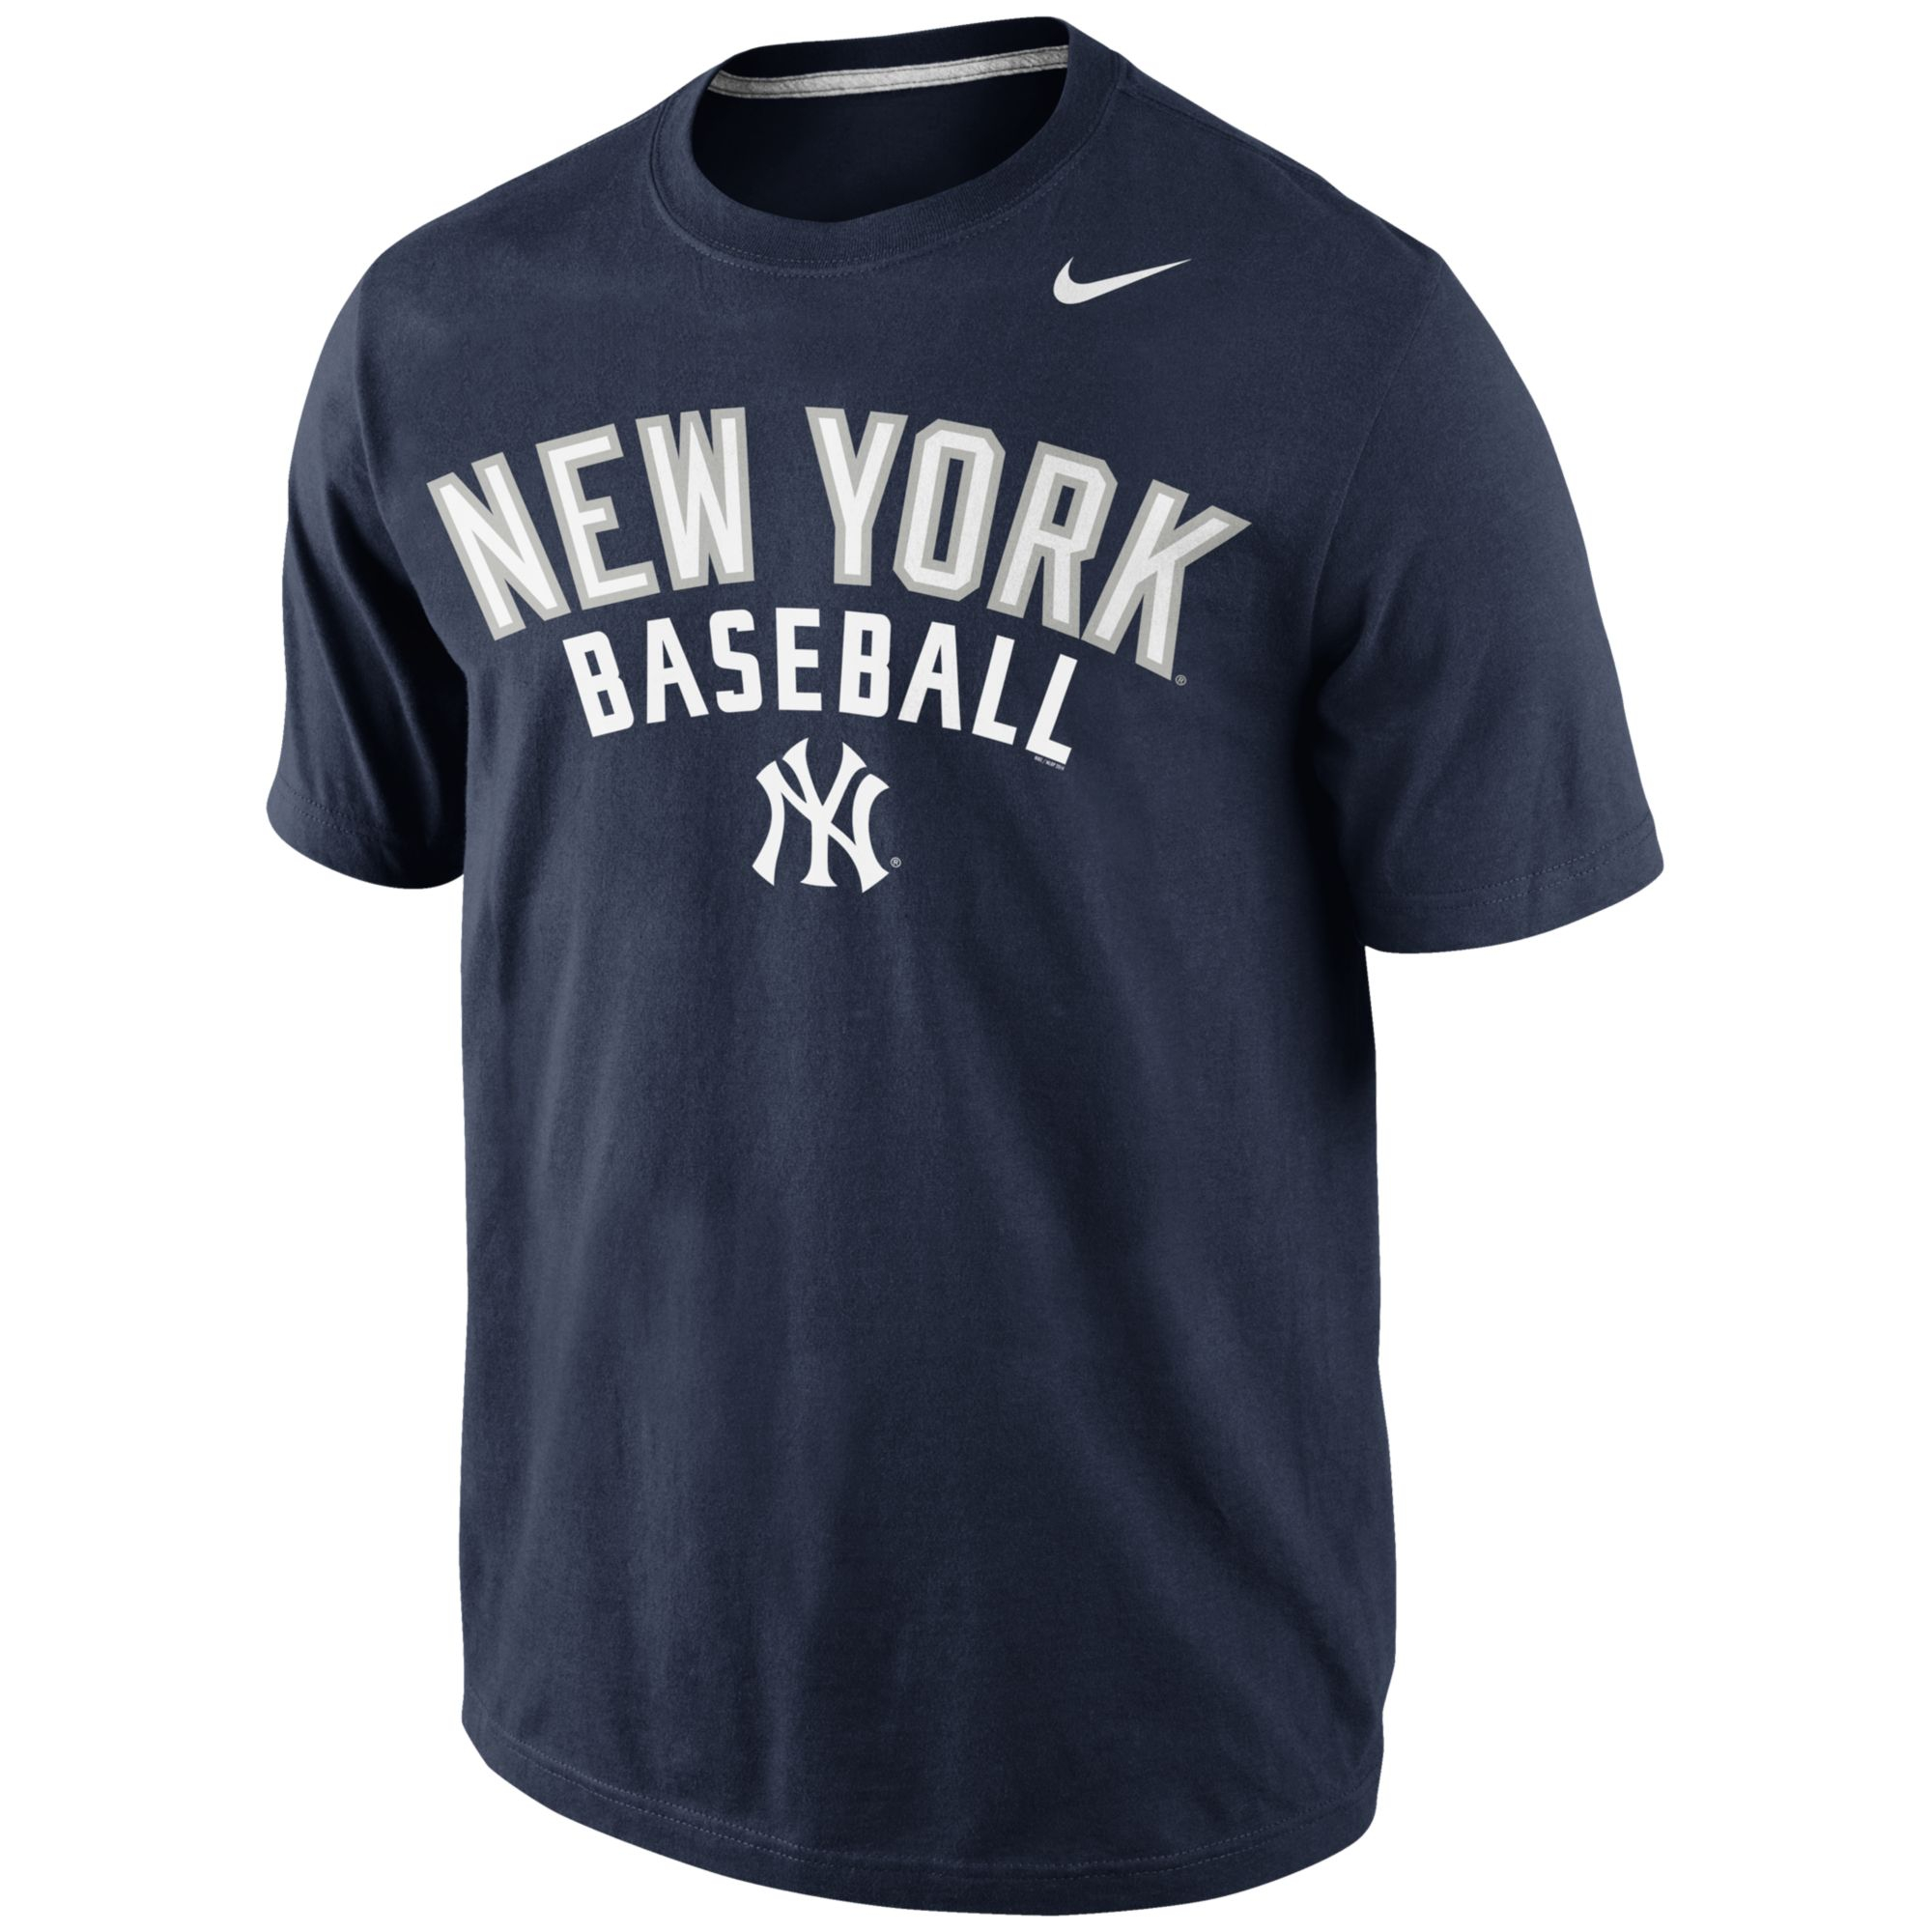 Lyst - Nike Mens New York Yankees Away Practice Tshirt in Blue for Men